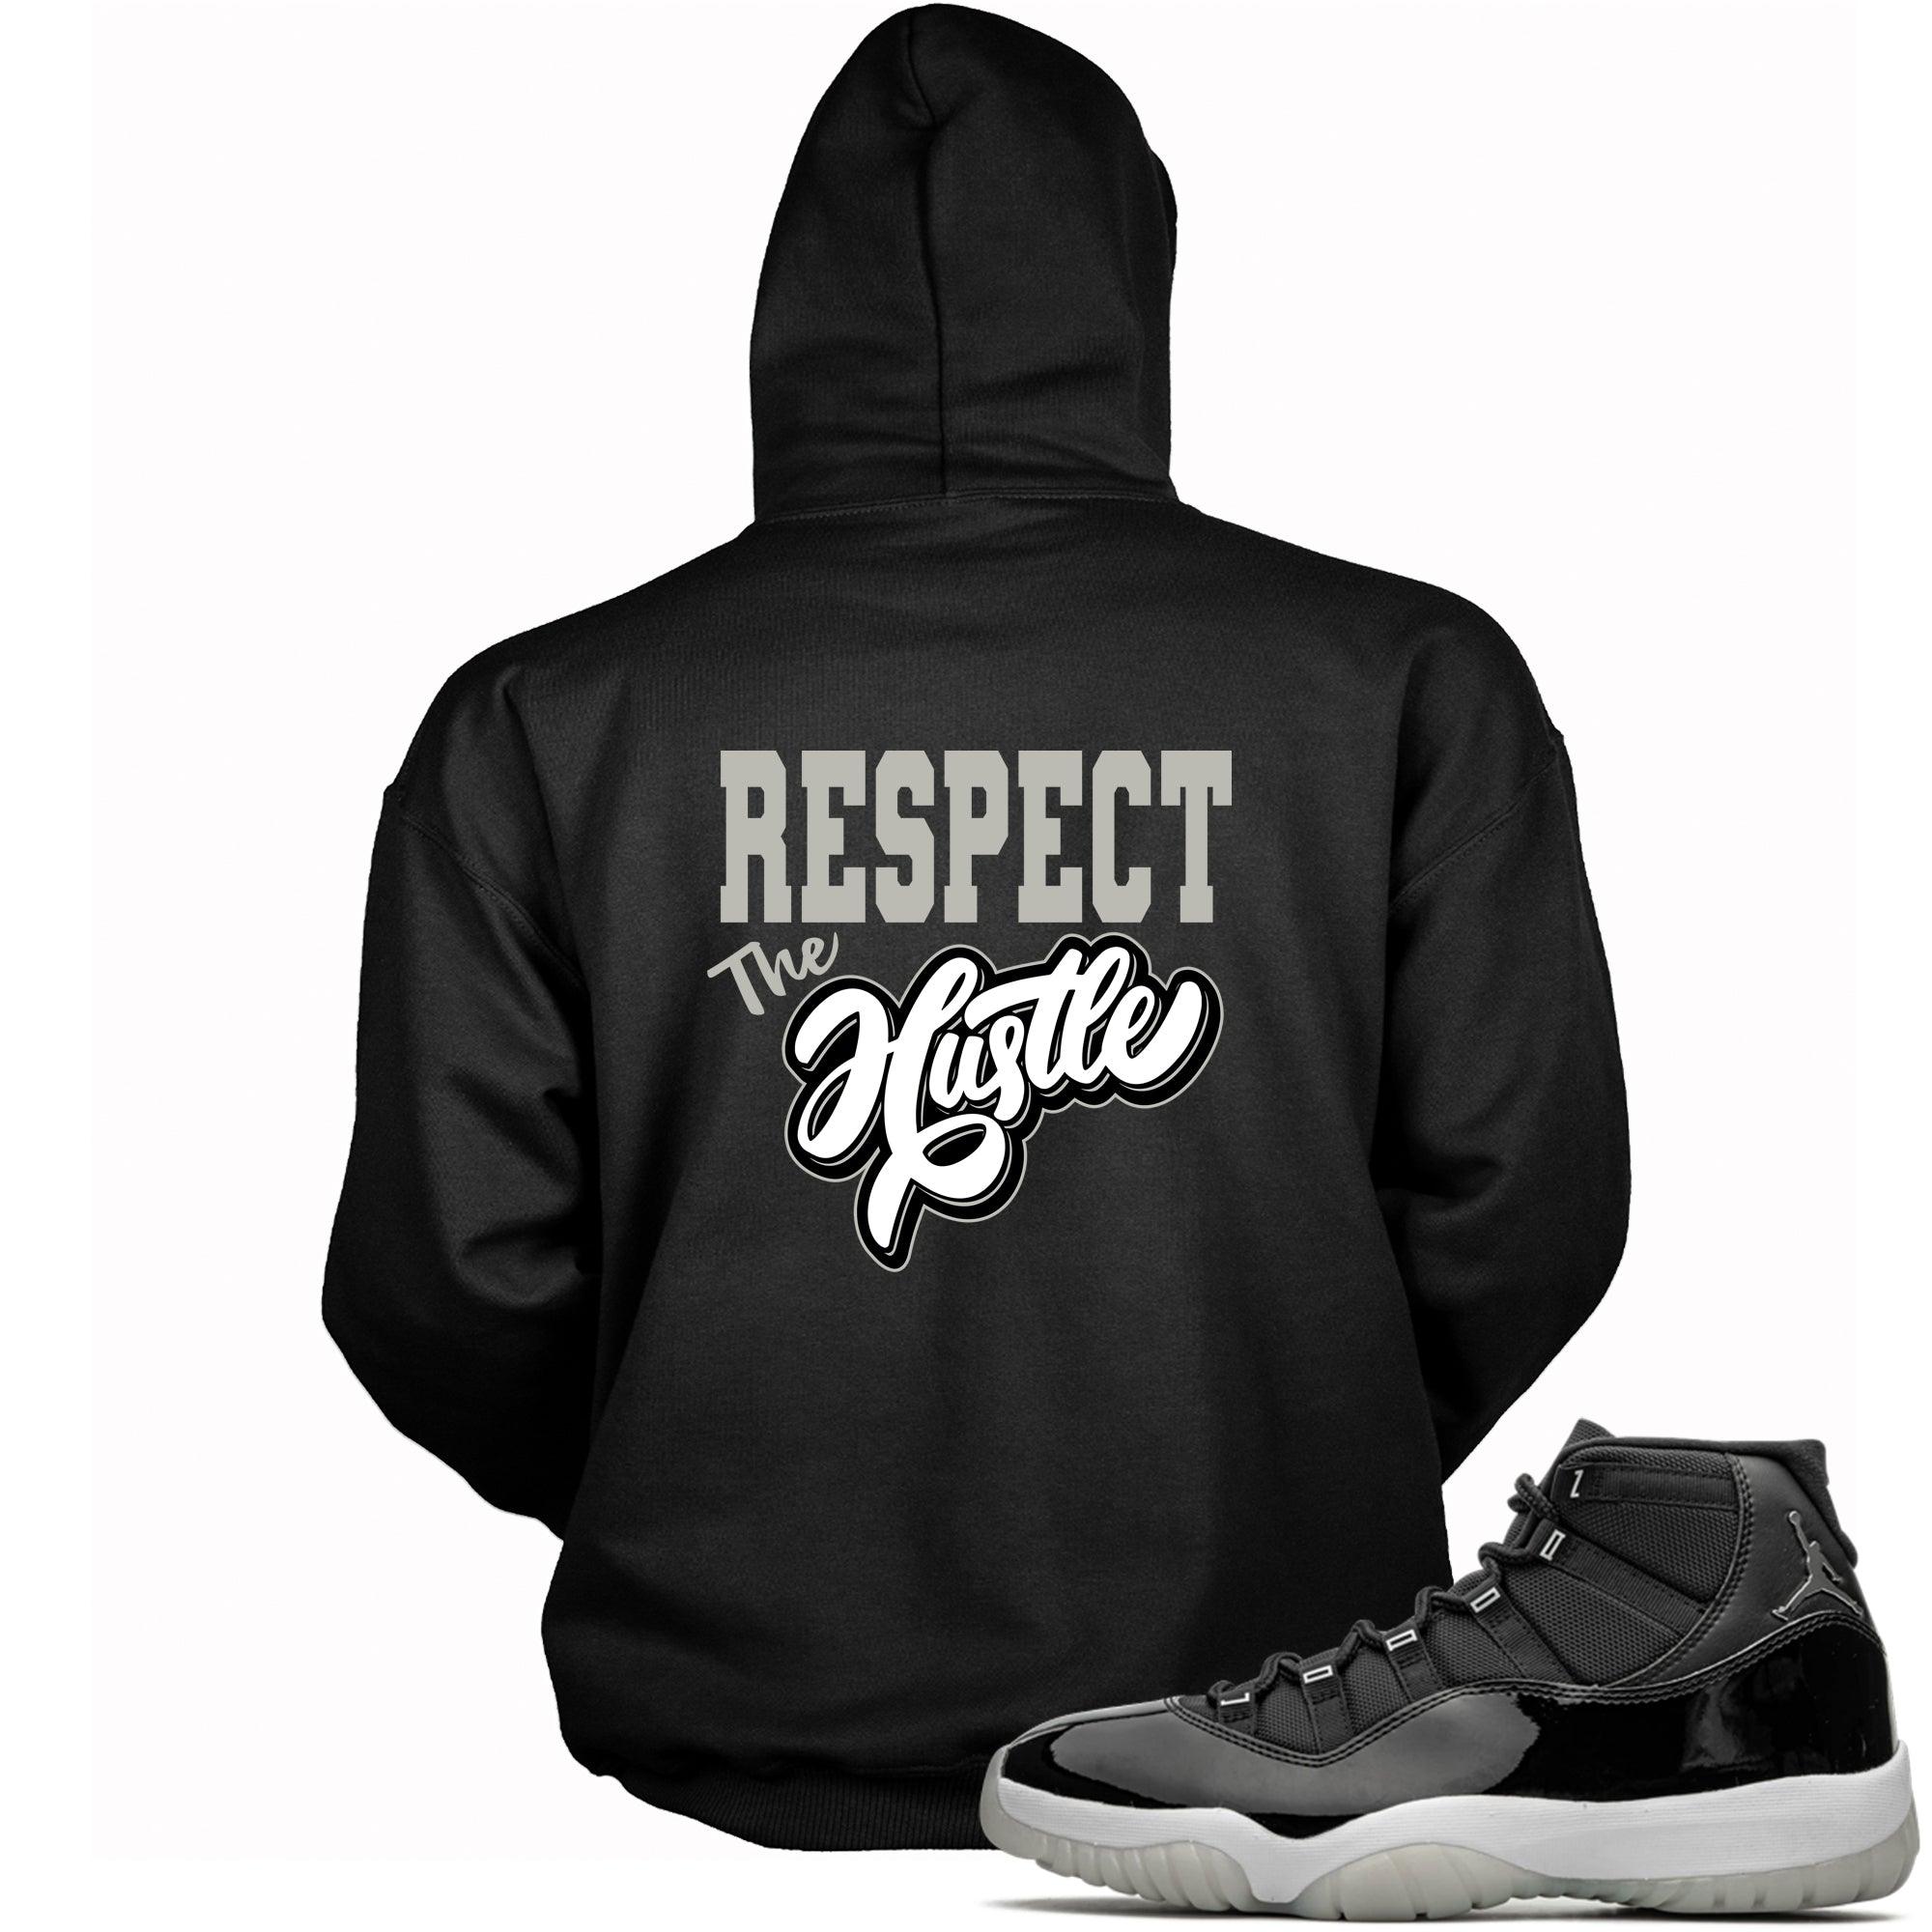 Black Respect The Hustle Hoodie AJ 11s Retro Jubilee photo